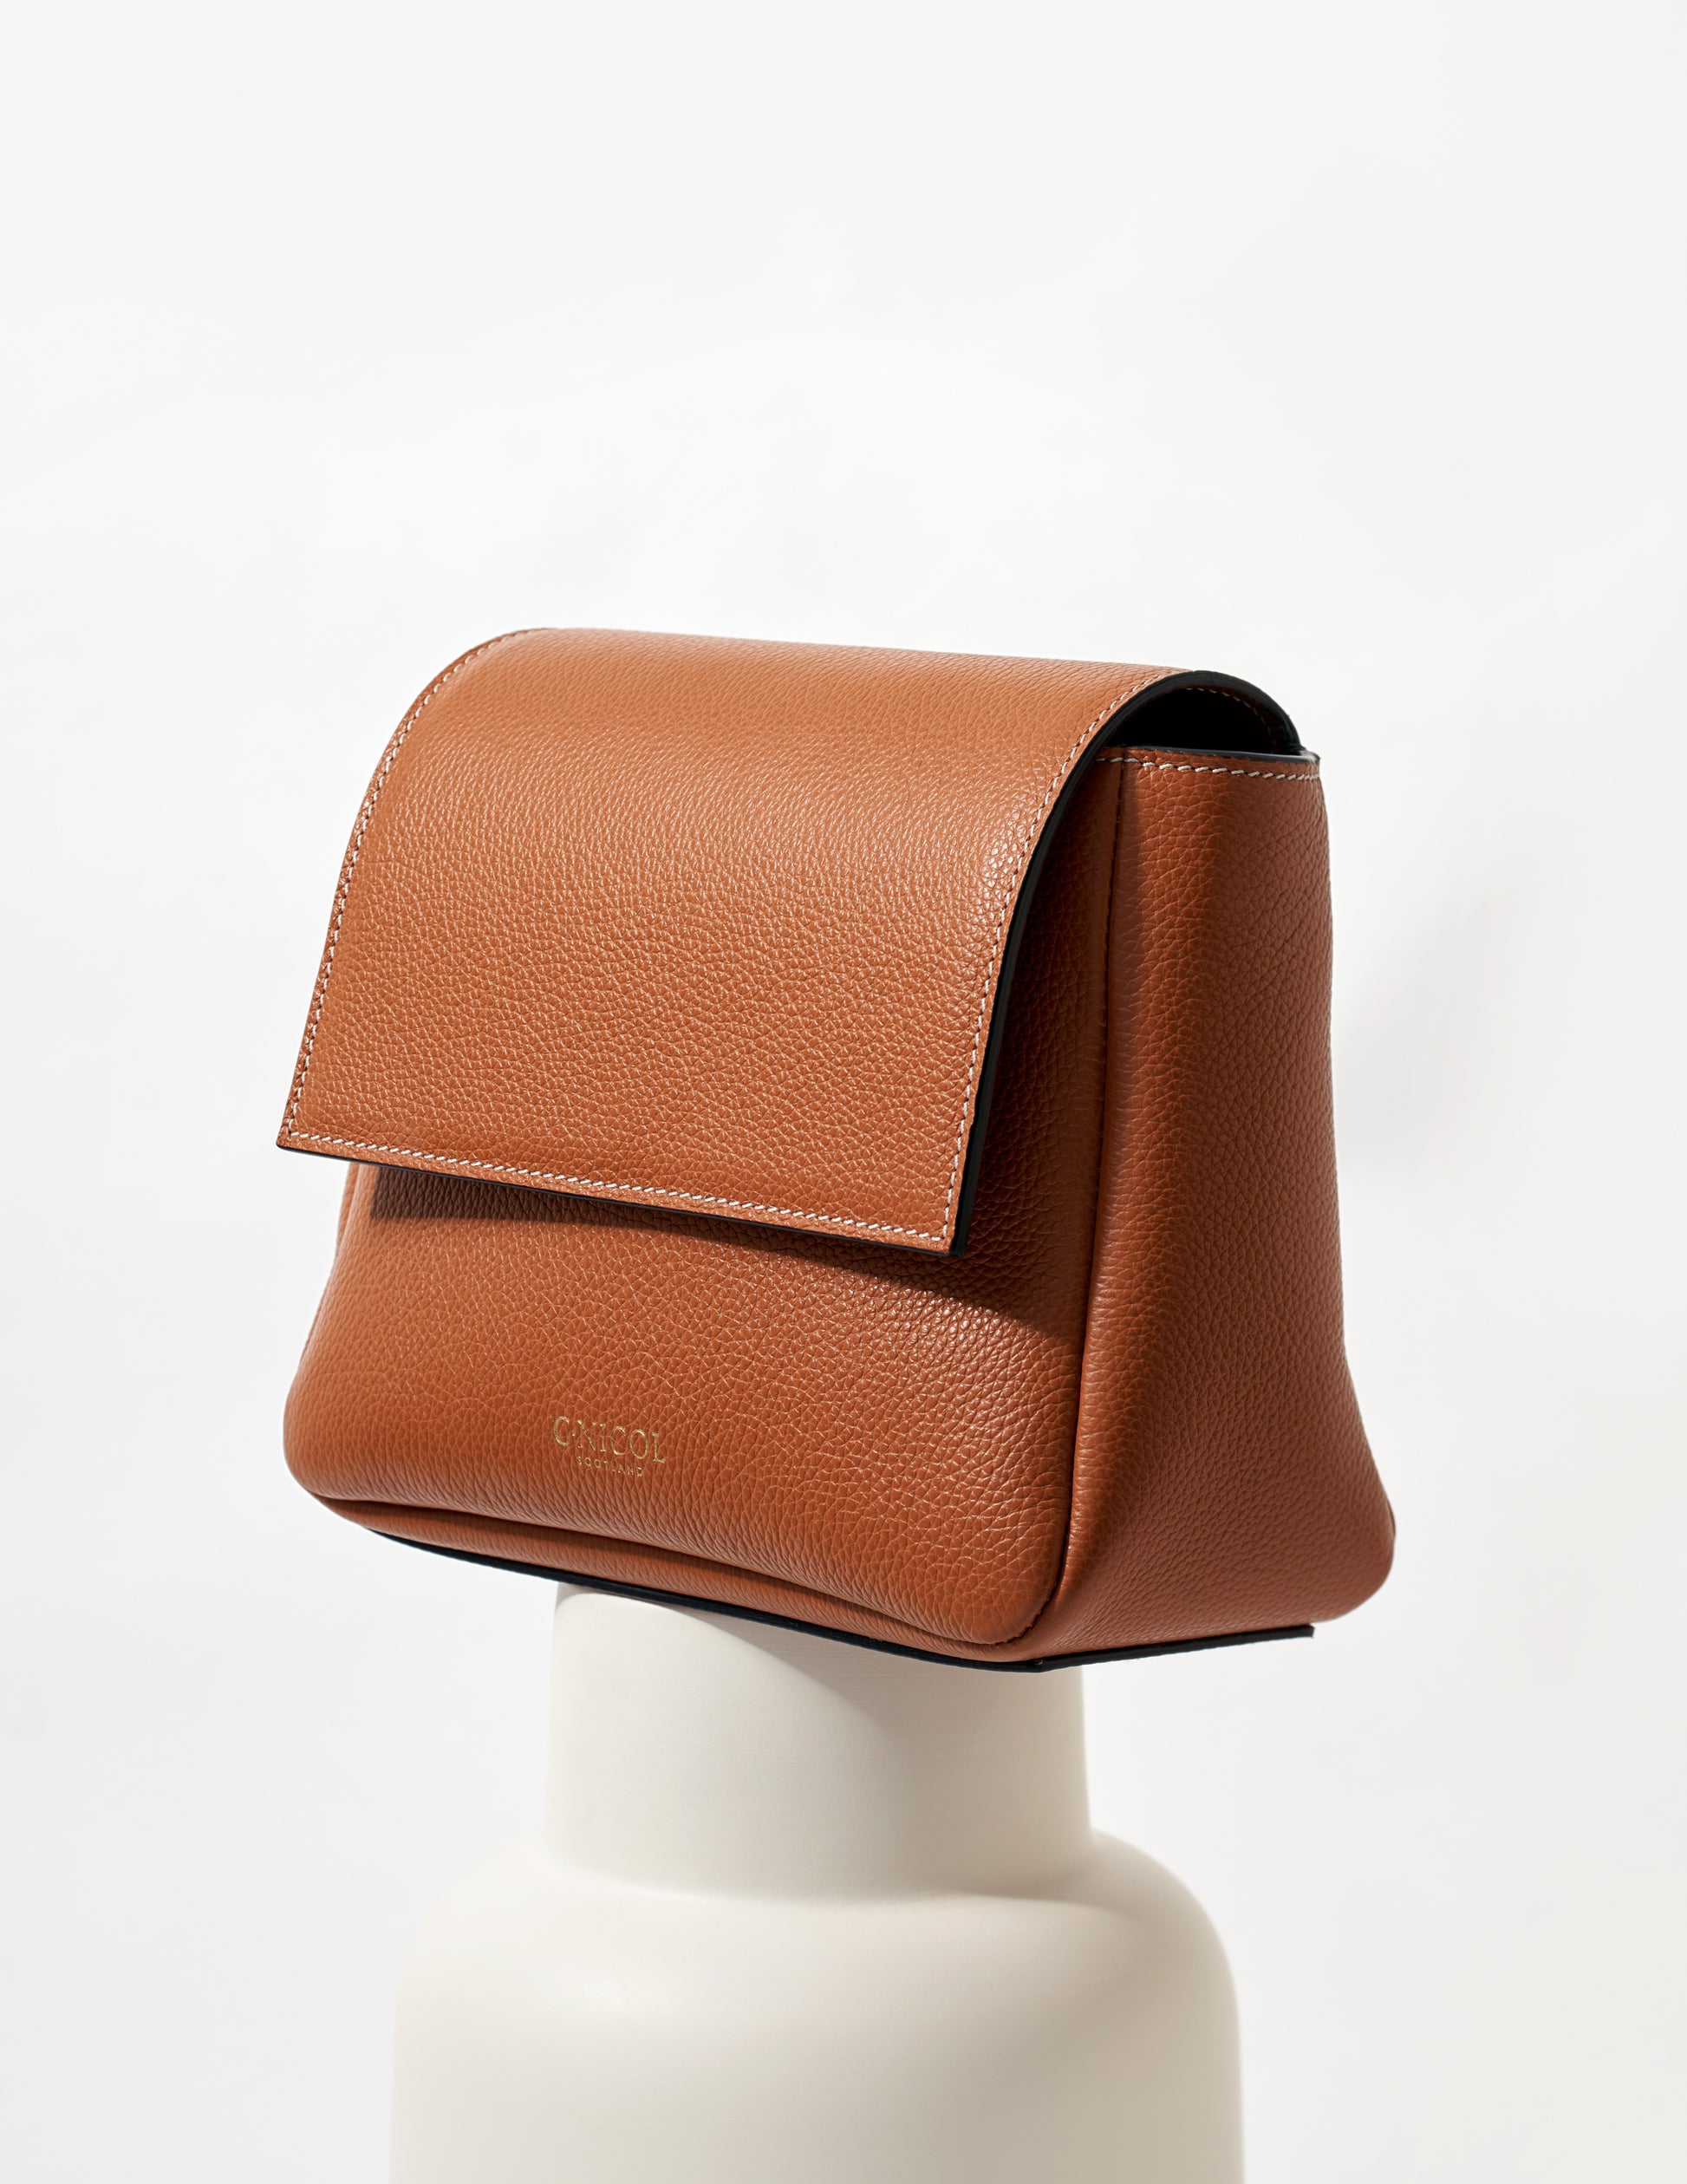 CNicol Brown Leather Fia Bag on White Base